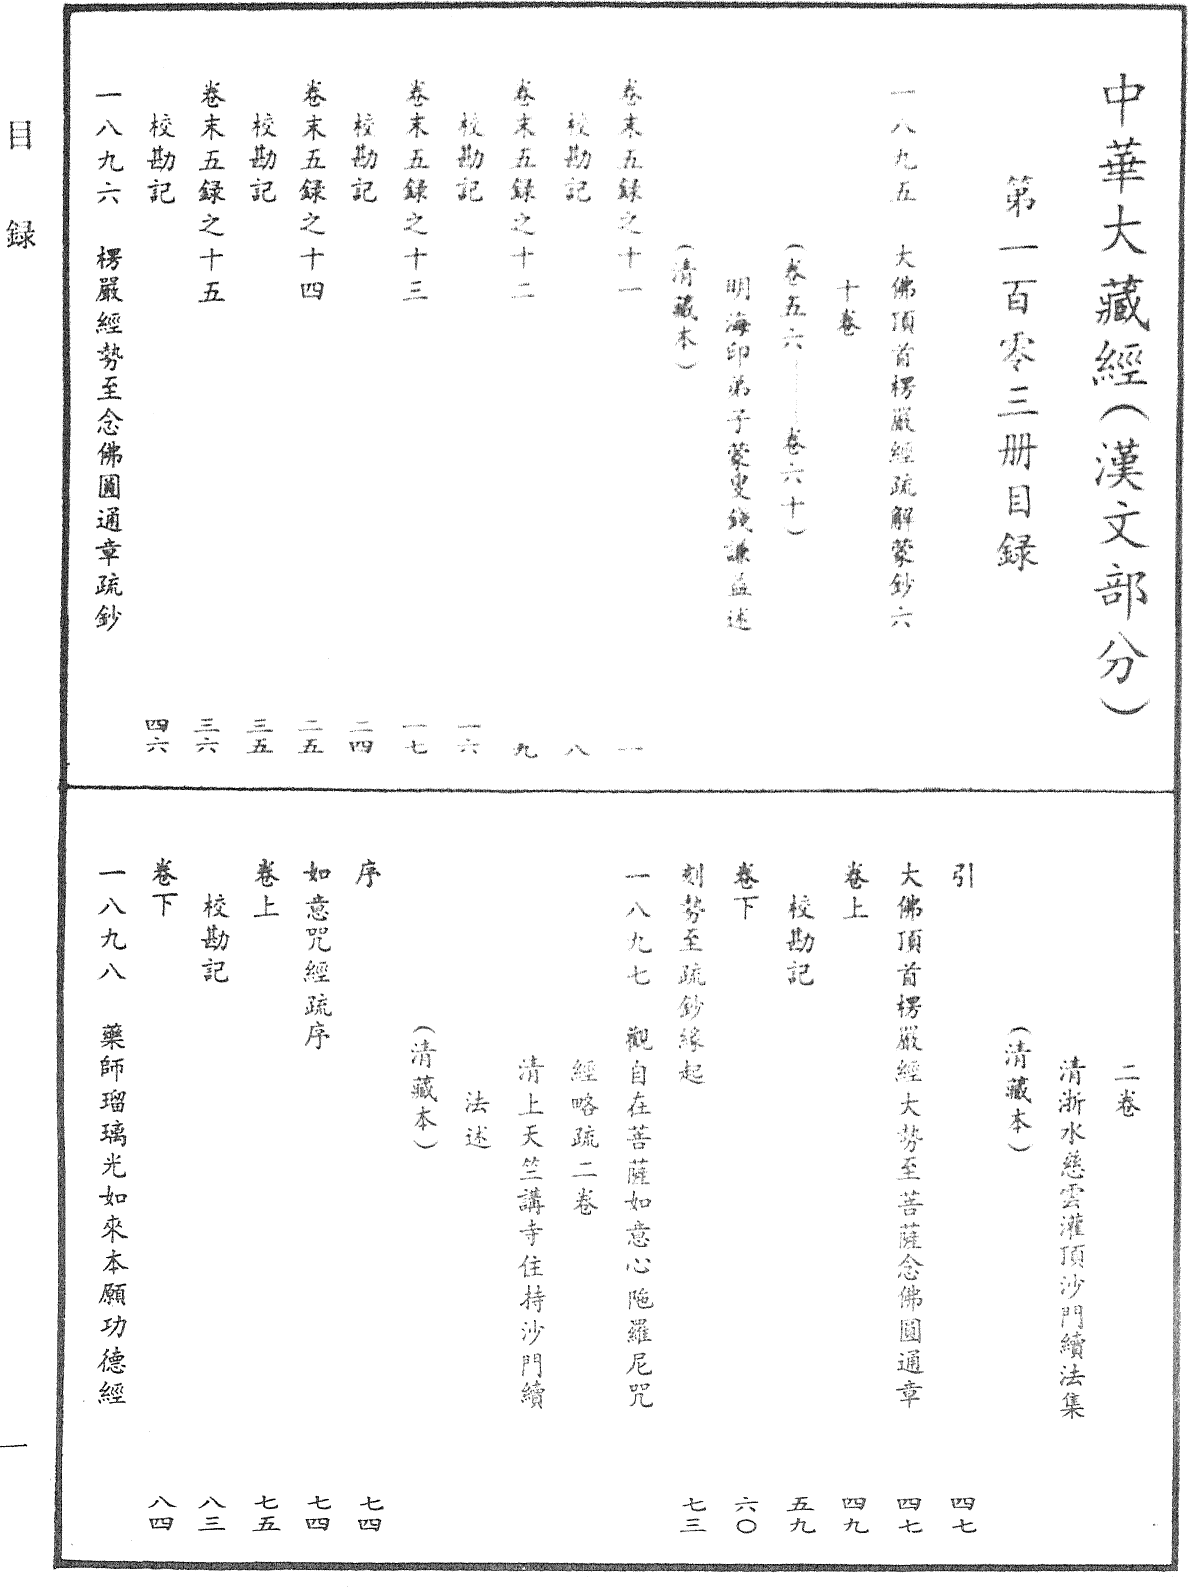 File:《中華大藏經》 第103冊 目録 (1).png